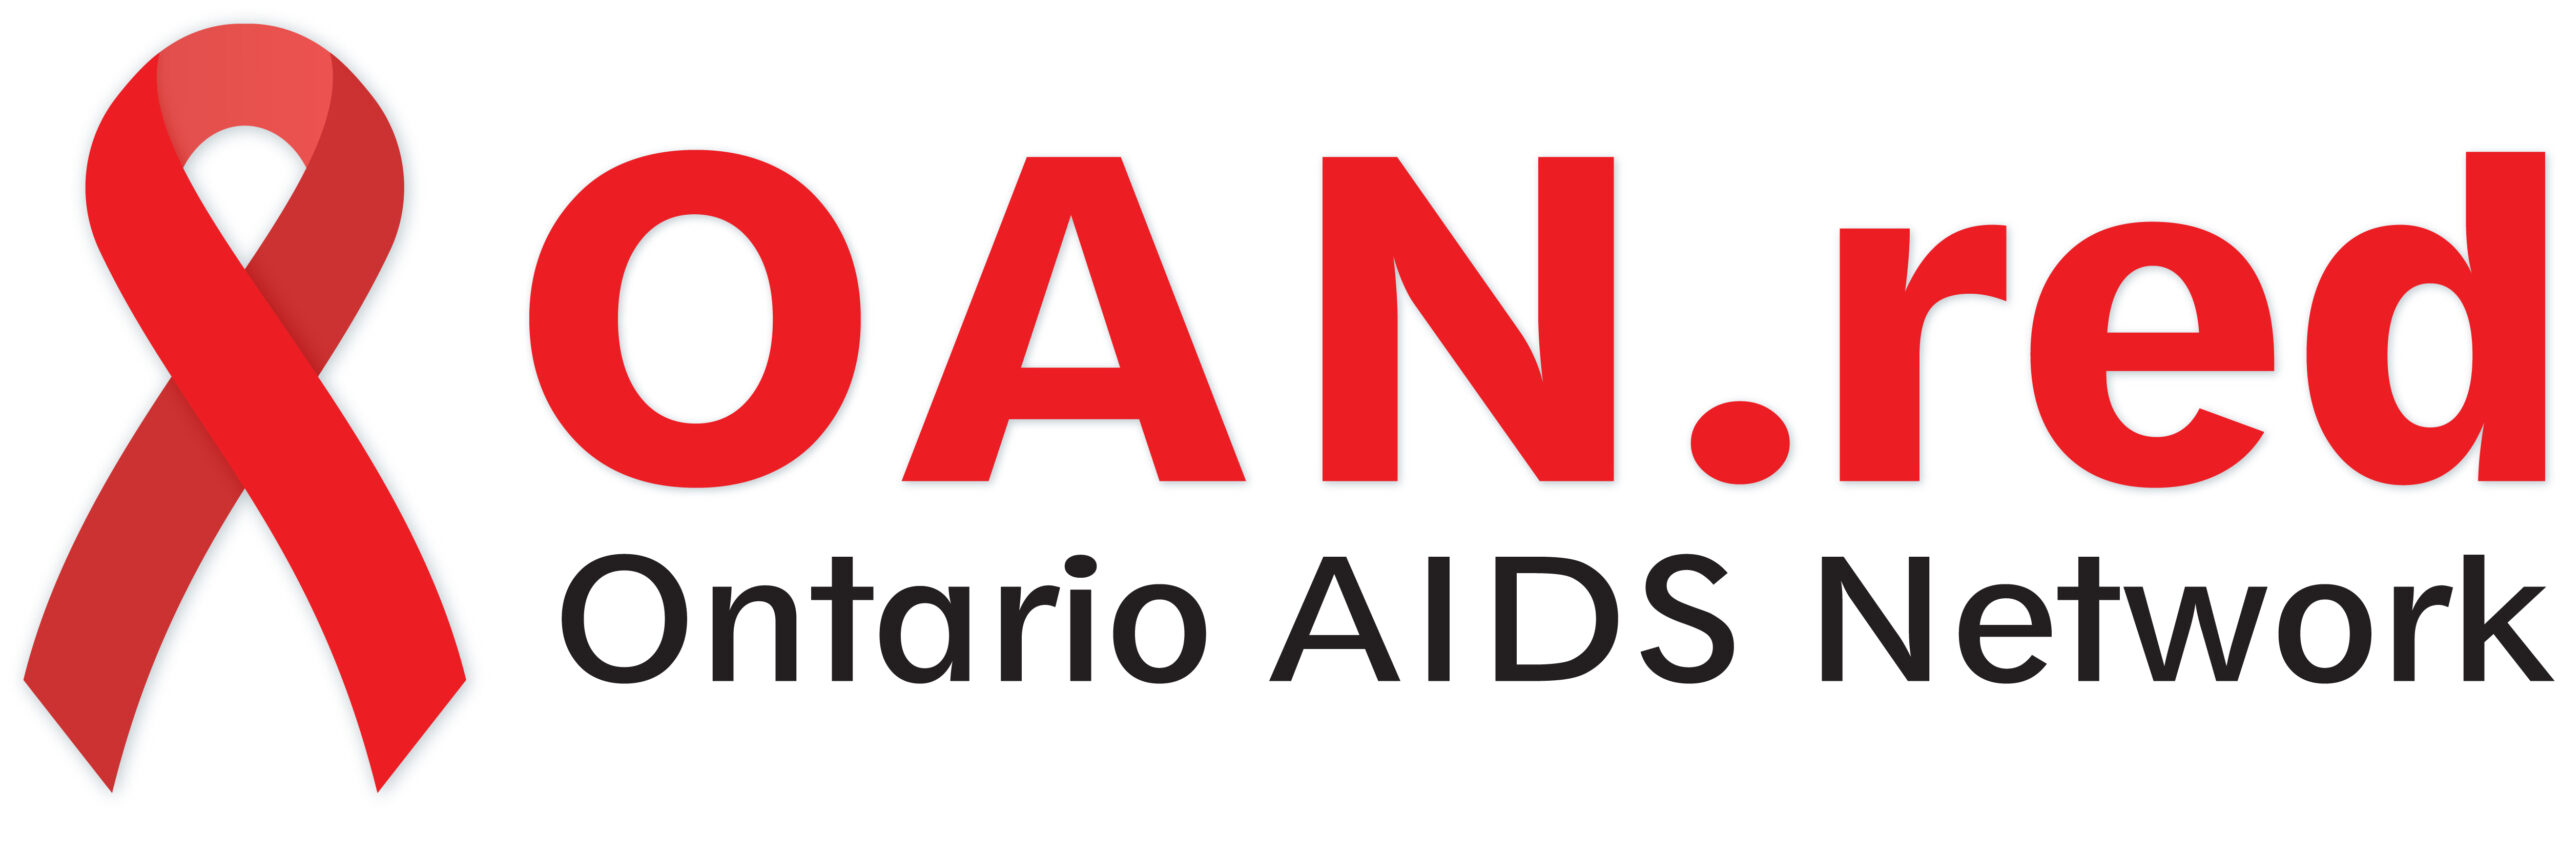 Ontario AIDS Network (OAN)